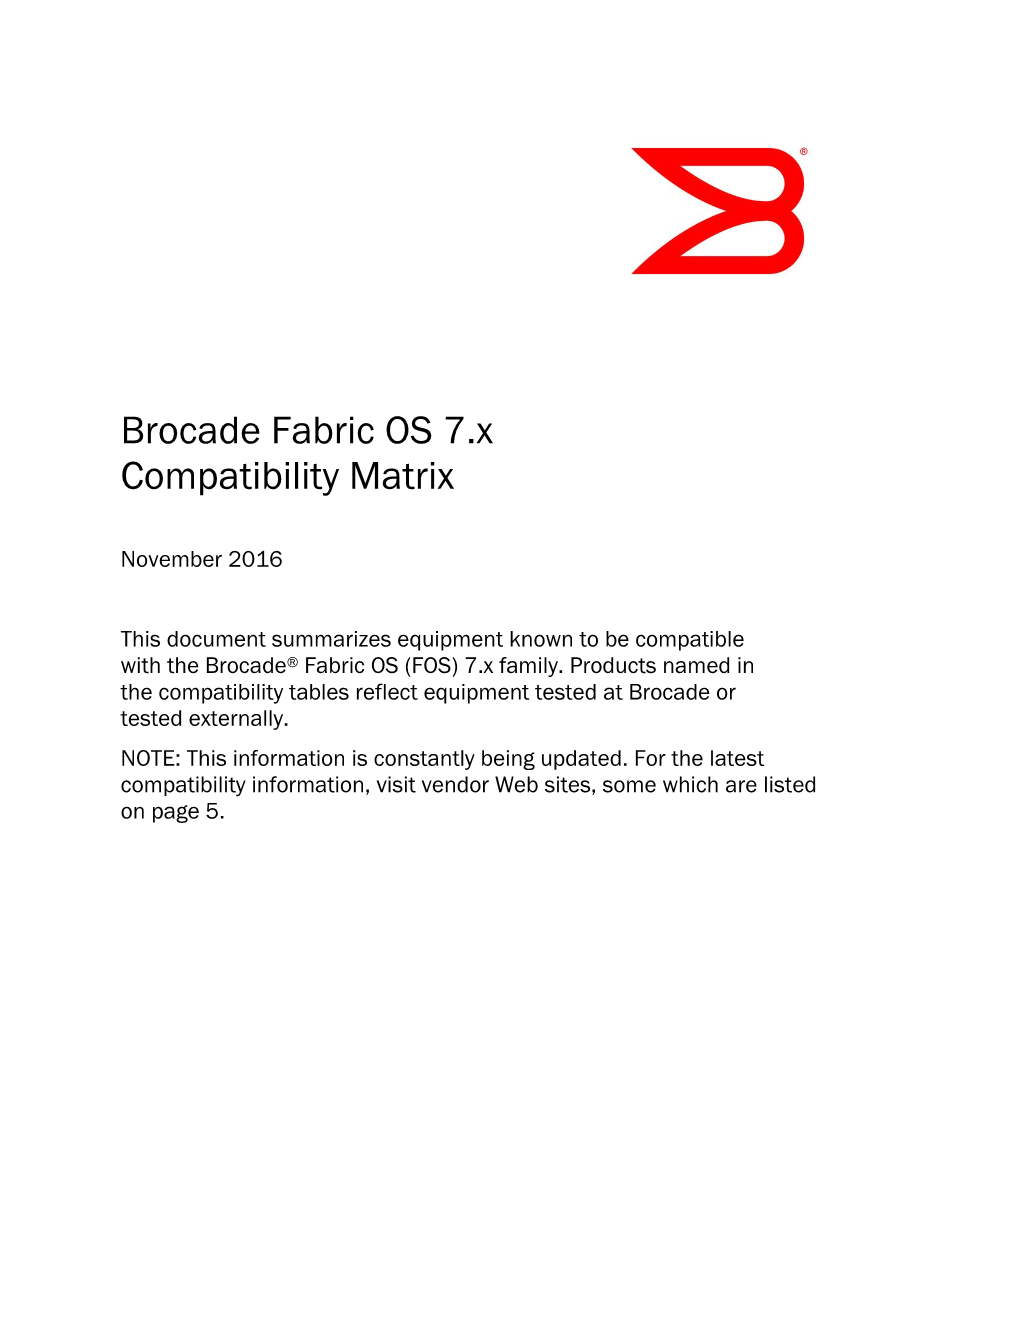 Brocade Fabric OS 7.X Compatibility Matrix